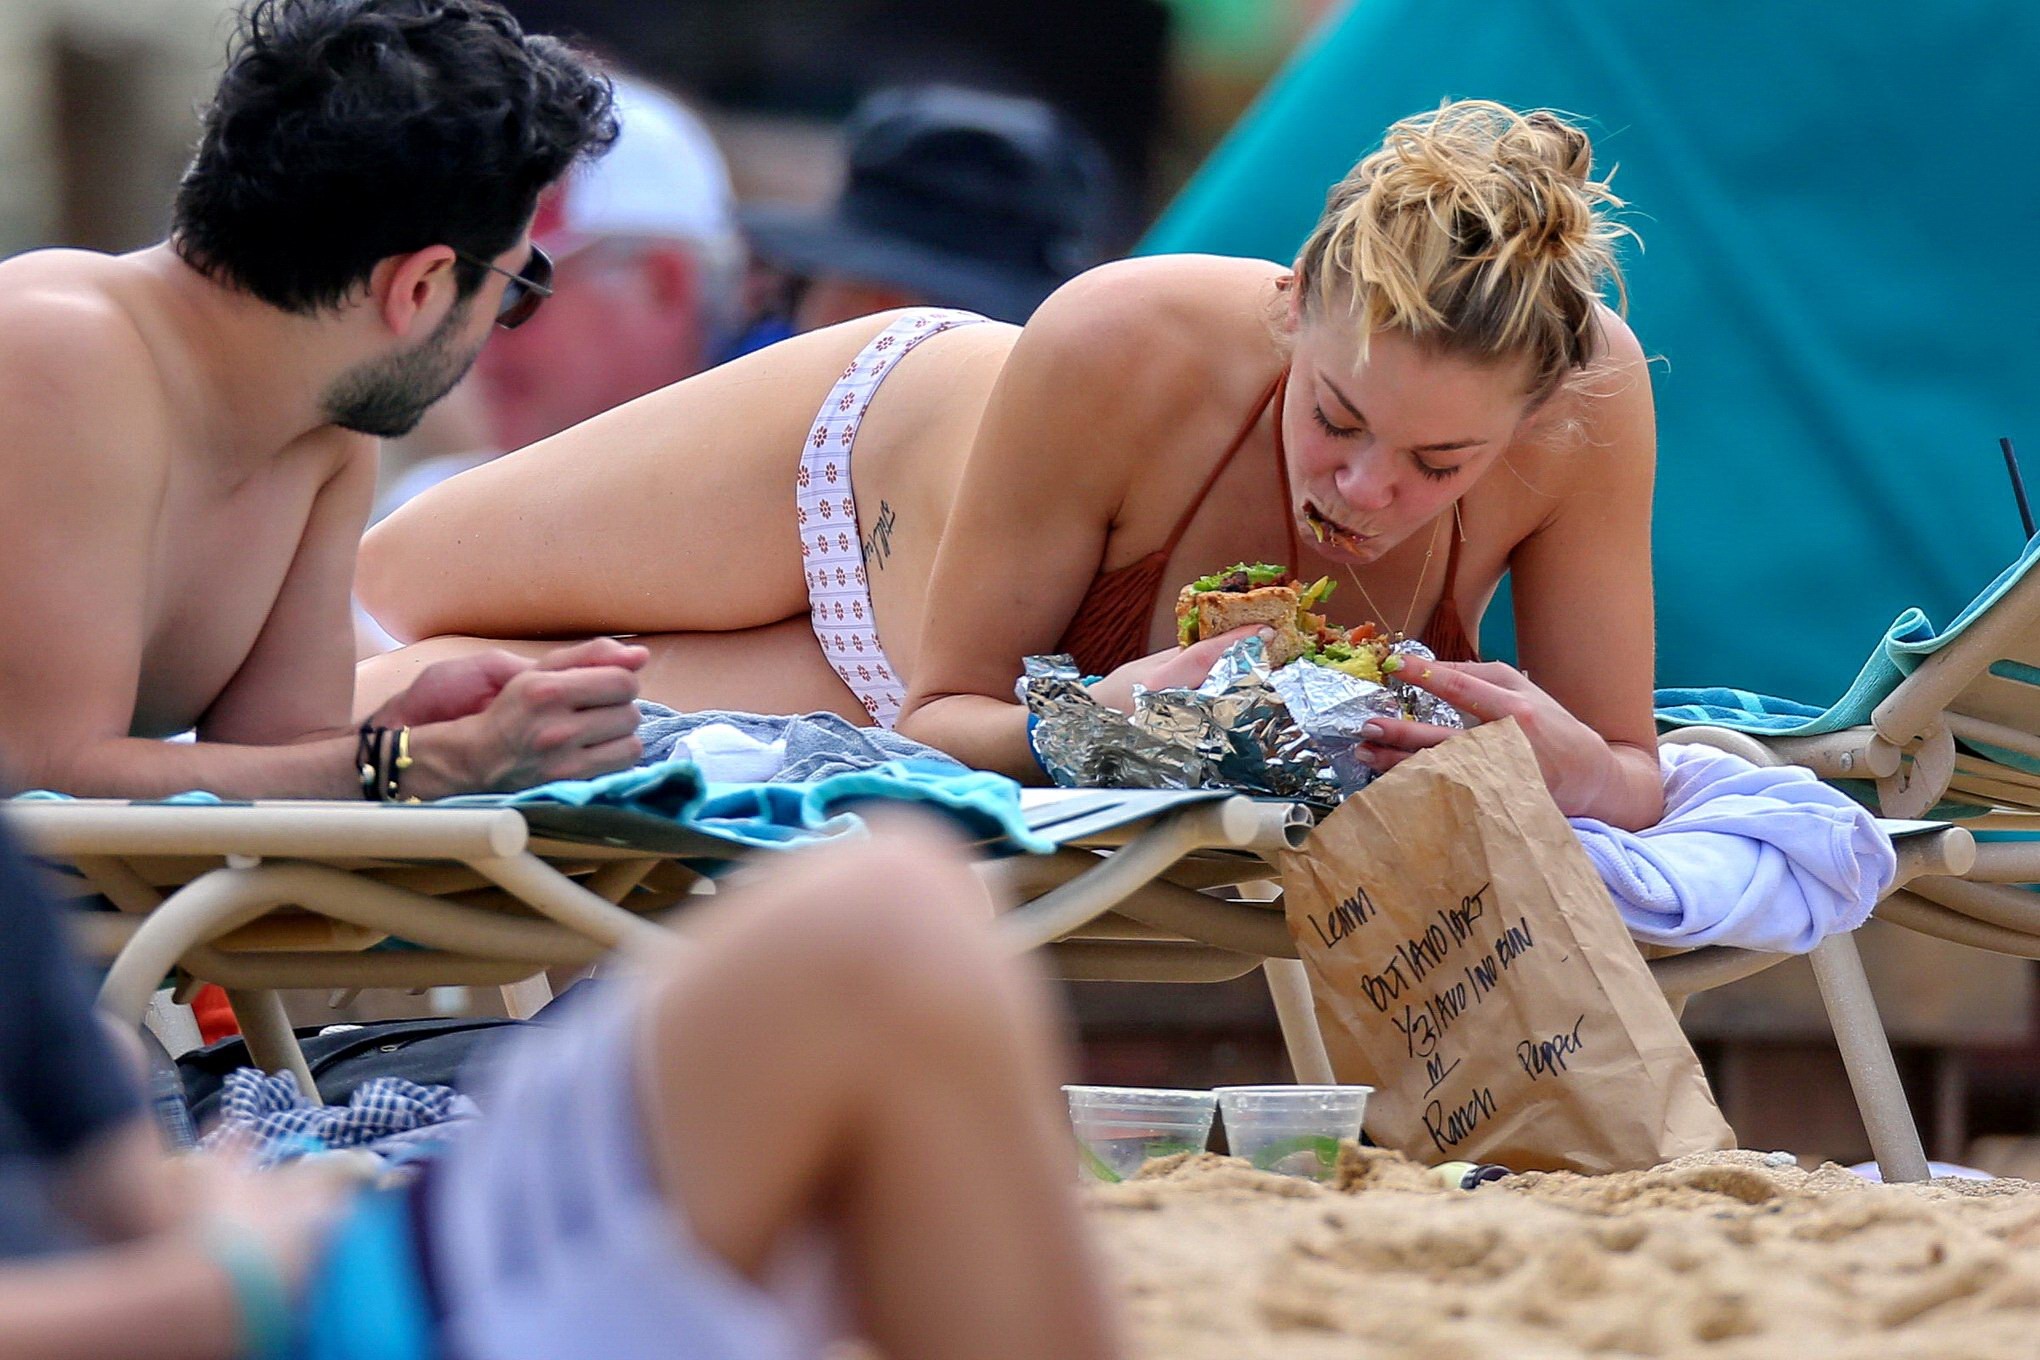 Leann rimes en bikini bronceándose en una playa de hawaii
 #75203295